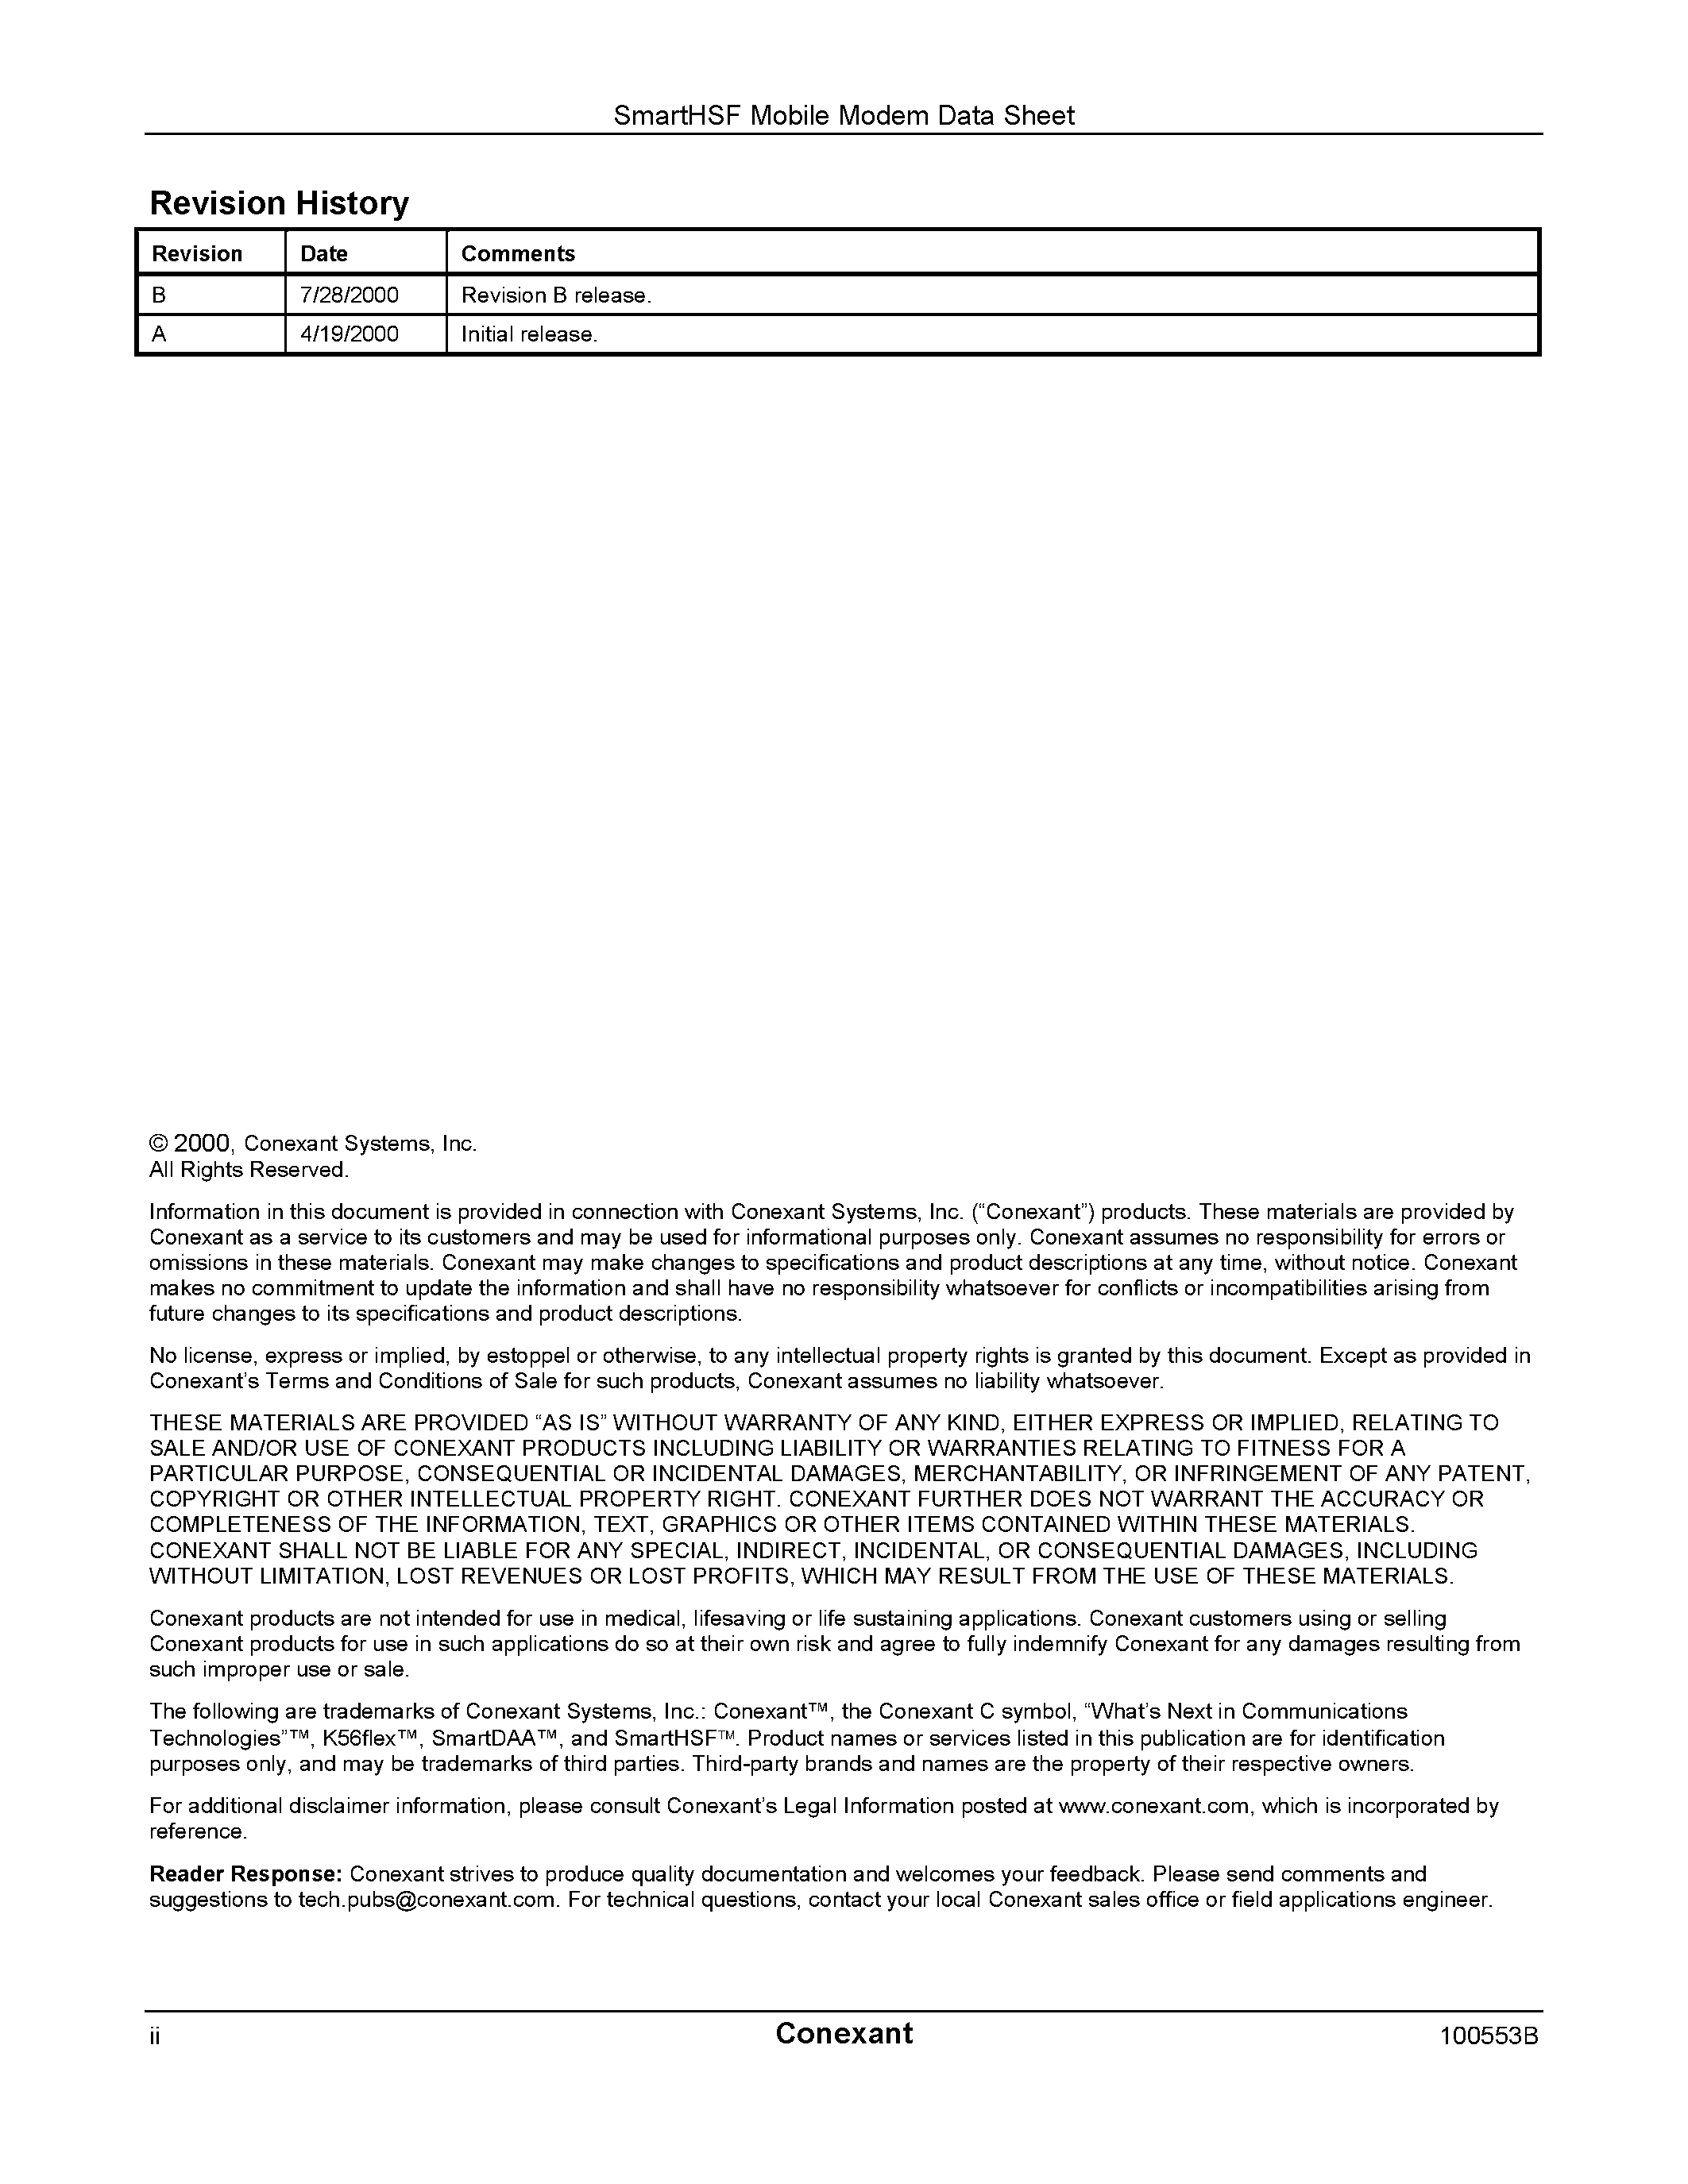 Datasheet CX11250 - SmartHSF Mobile Modem page 2